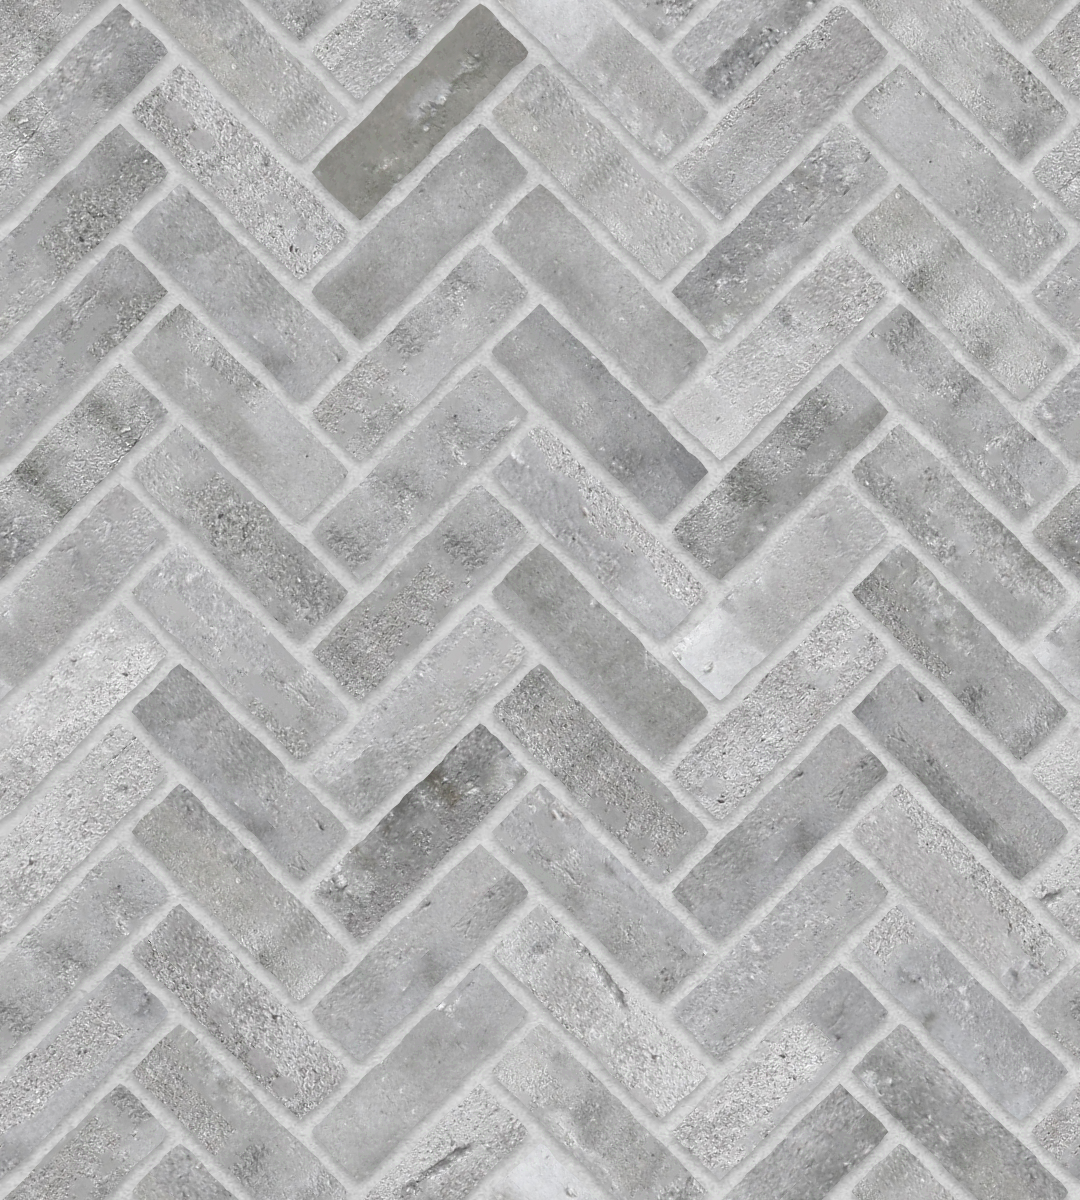 A seamless brick texture with finnish grey brick units arranged in a Herringbone pattern